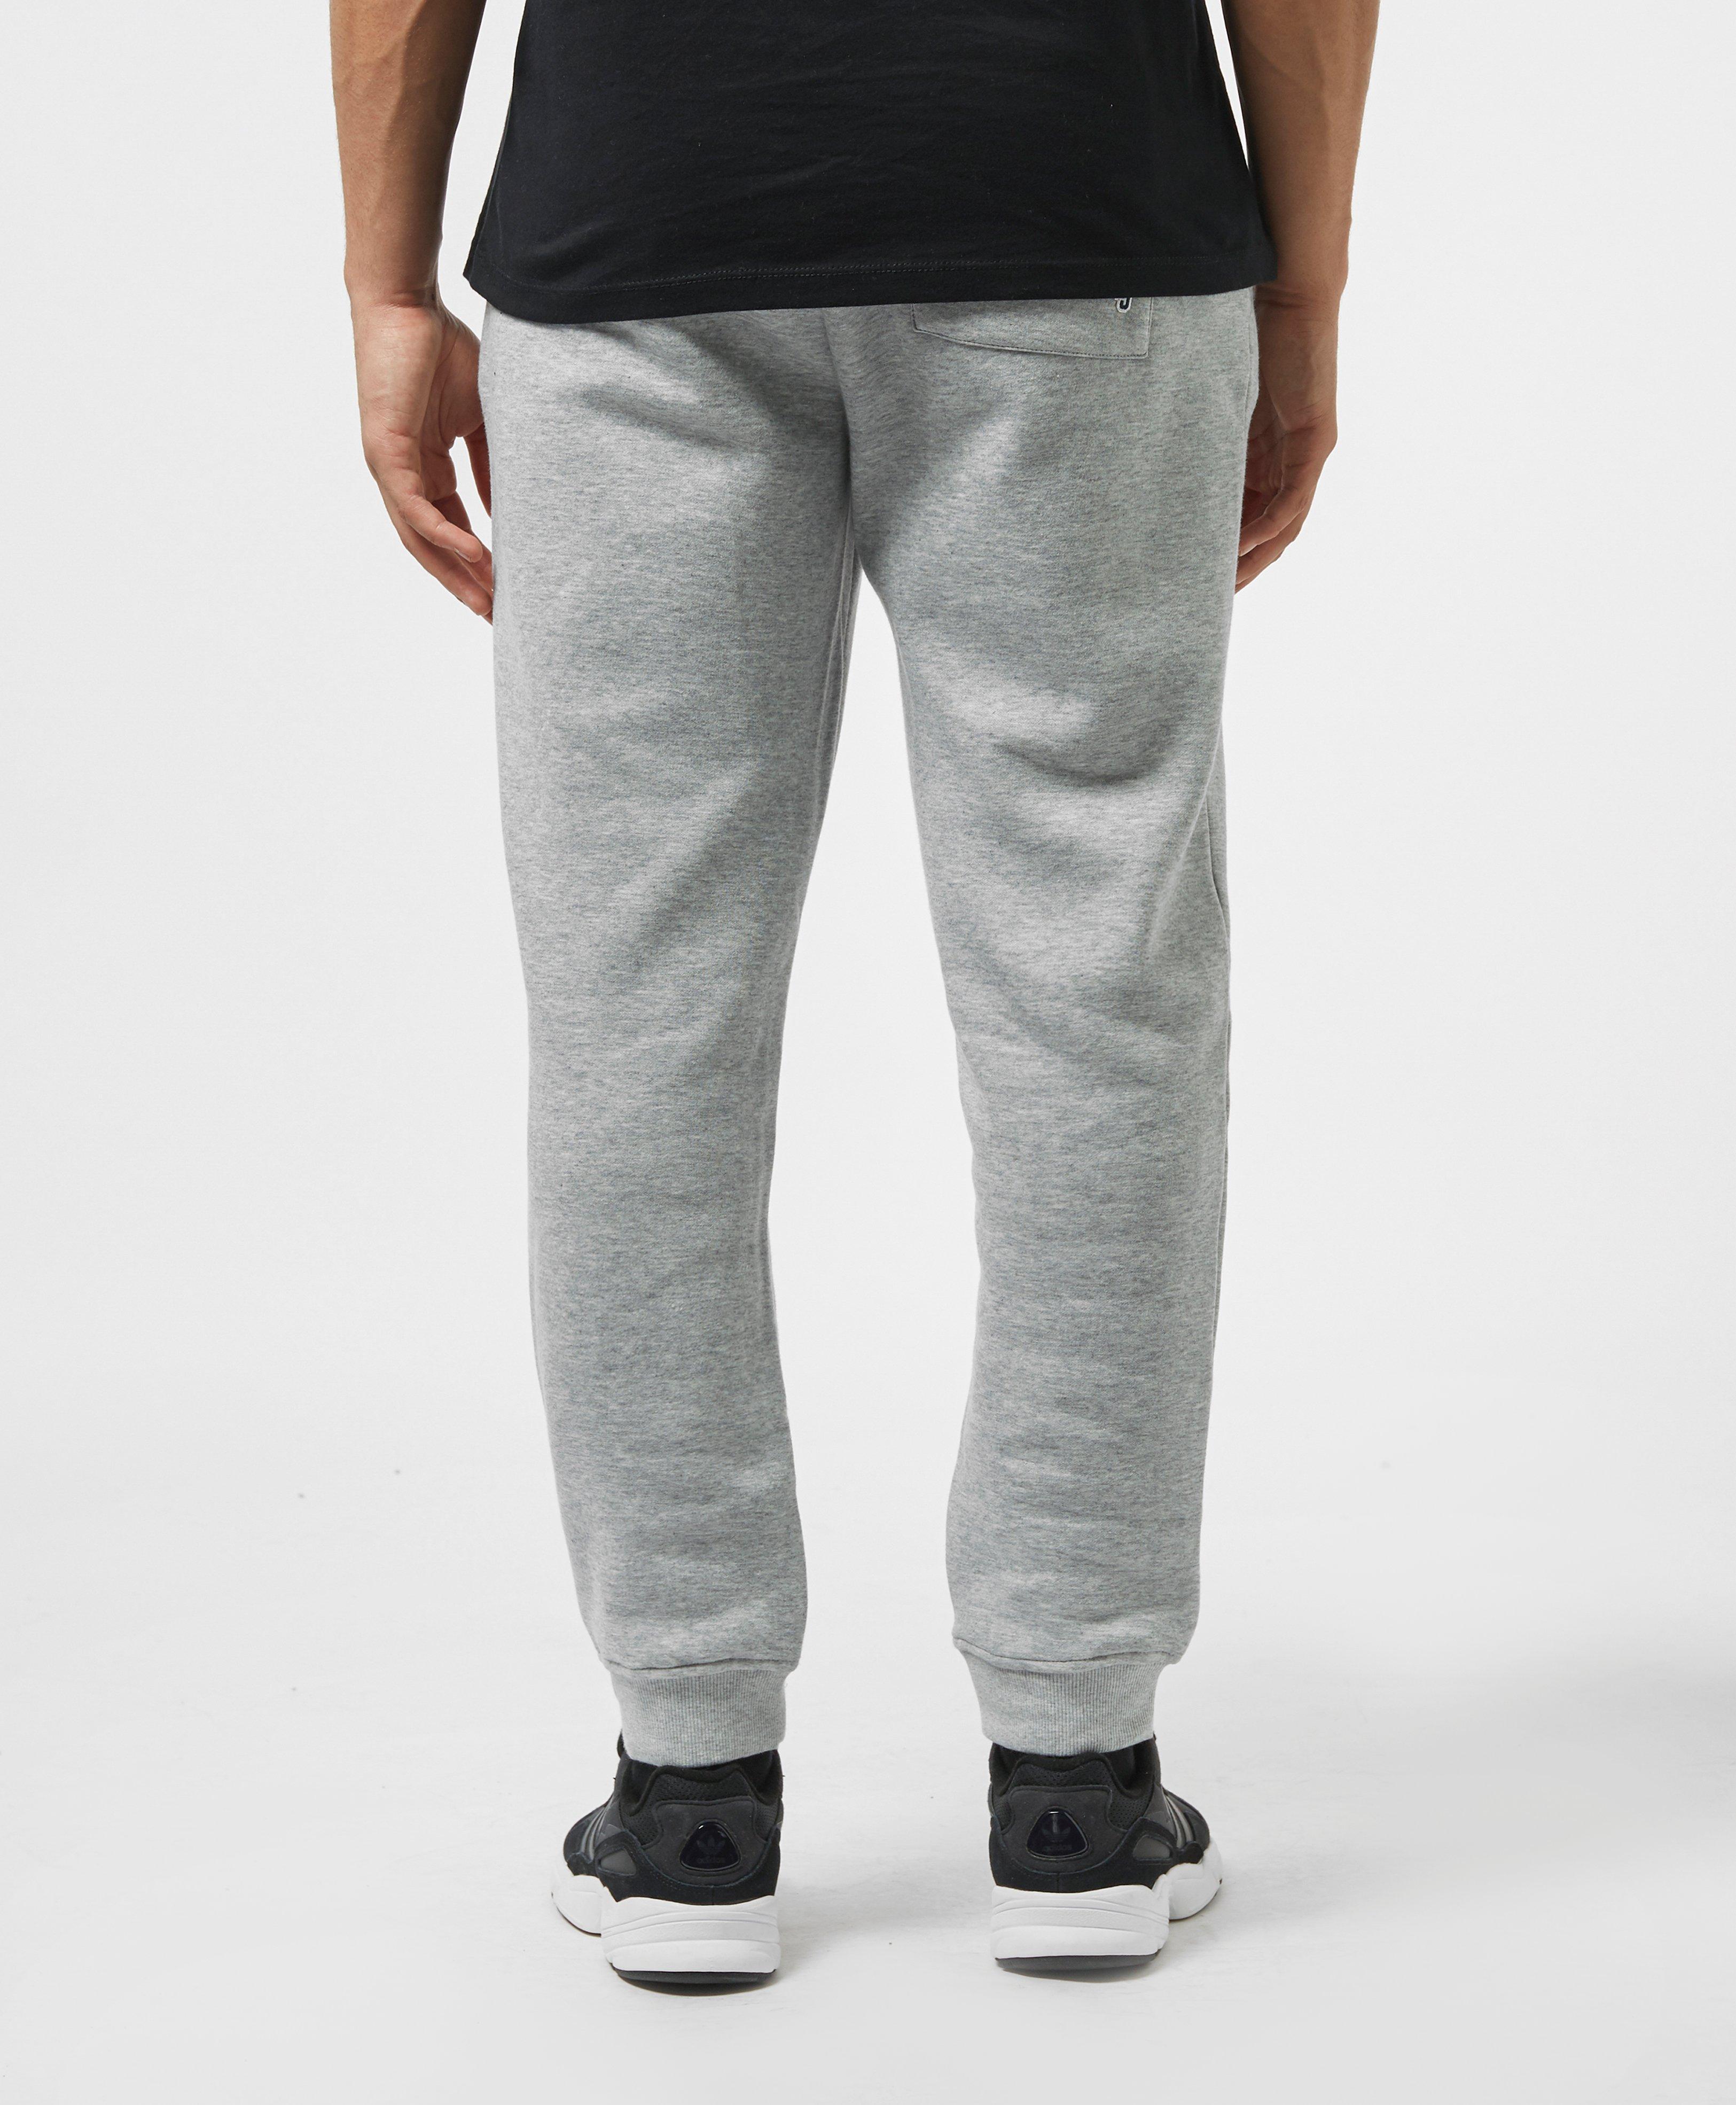 Tommy Hilfiger Denim Cuffed Track Pants in Grey (Gray) for Men - Lyst